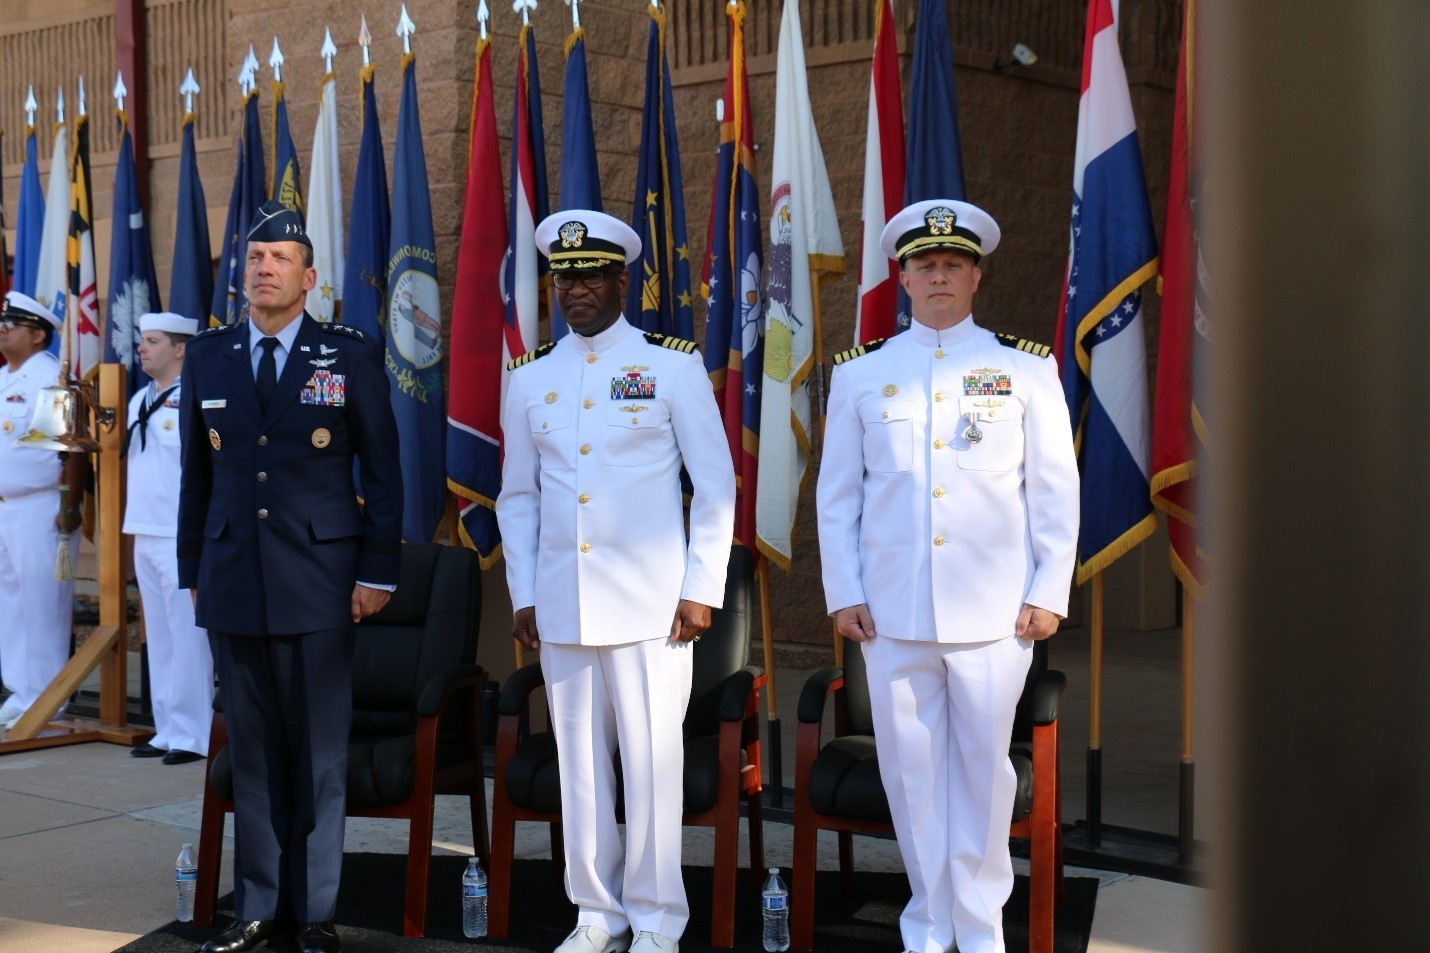 Photo: From left, U.S. Air Force Lt. Gen. Robert J. Skinner, DISA director; U.S. Navy Capt. Anthony Saxon, incoming commander; U.S. Navy Capt. Robert Matthias